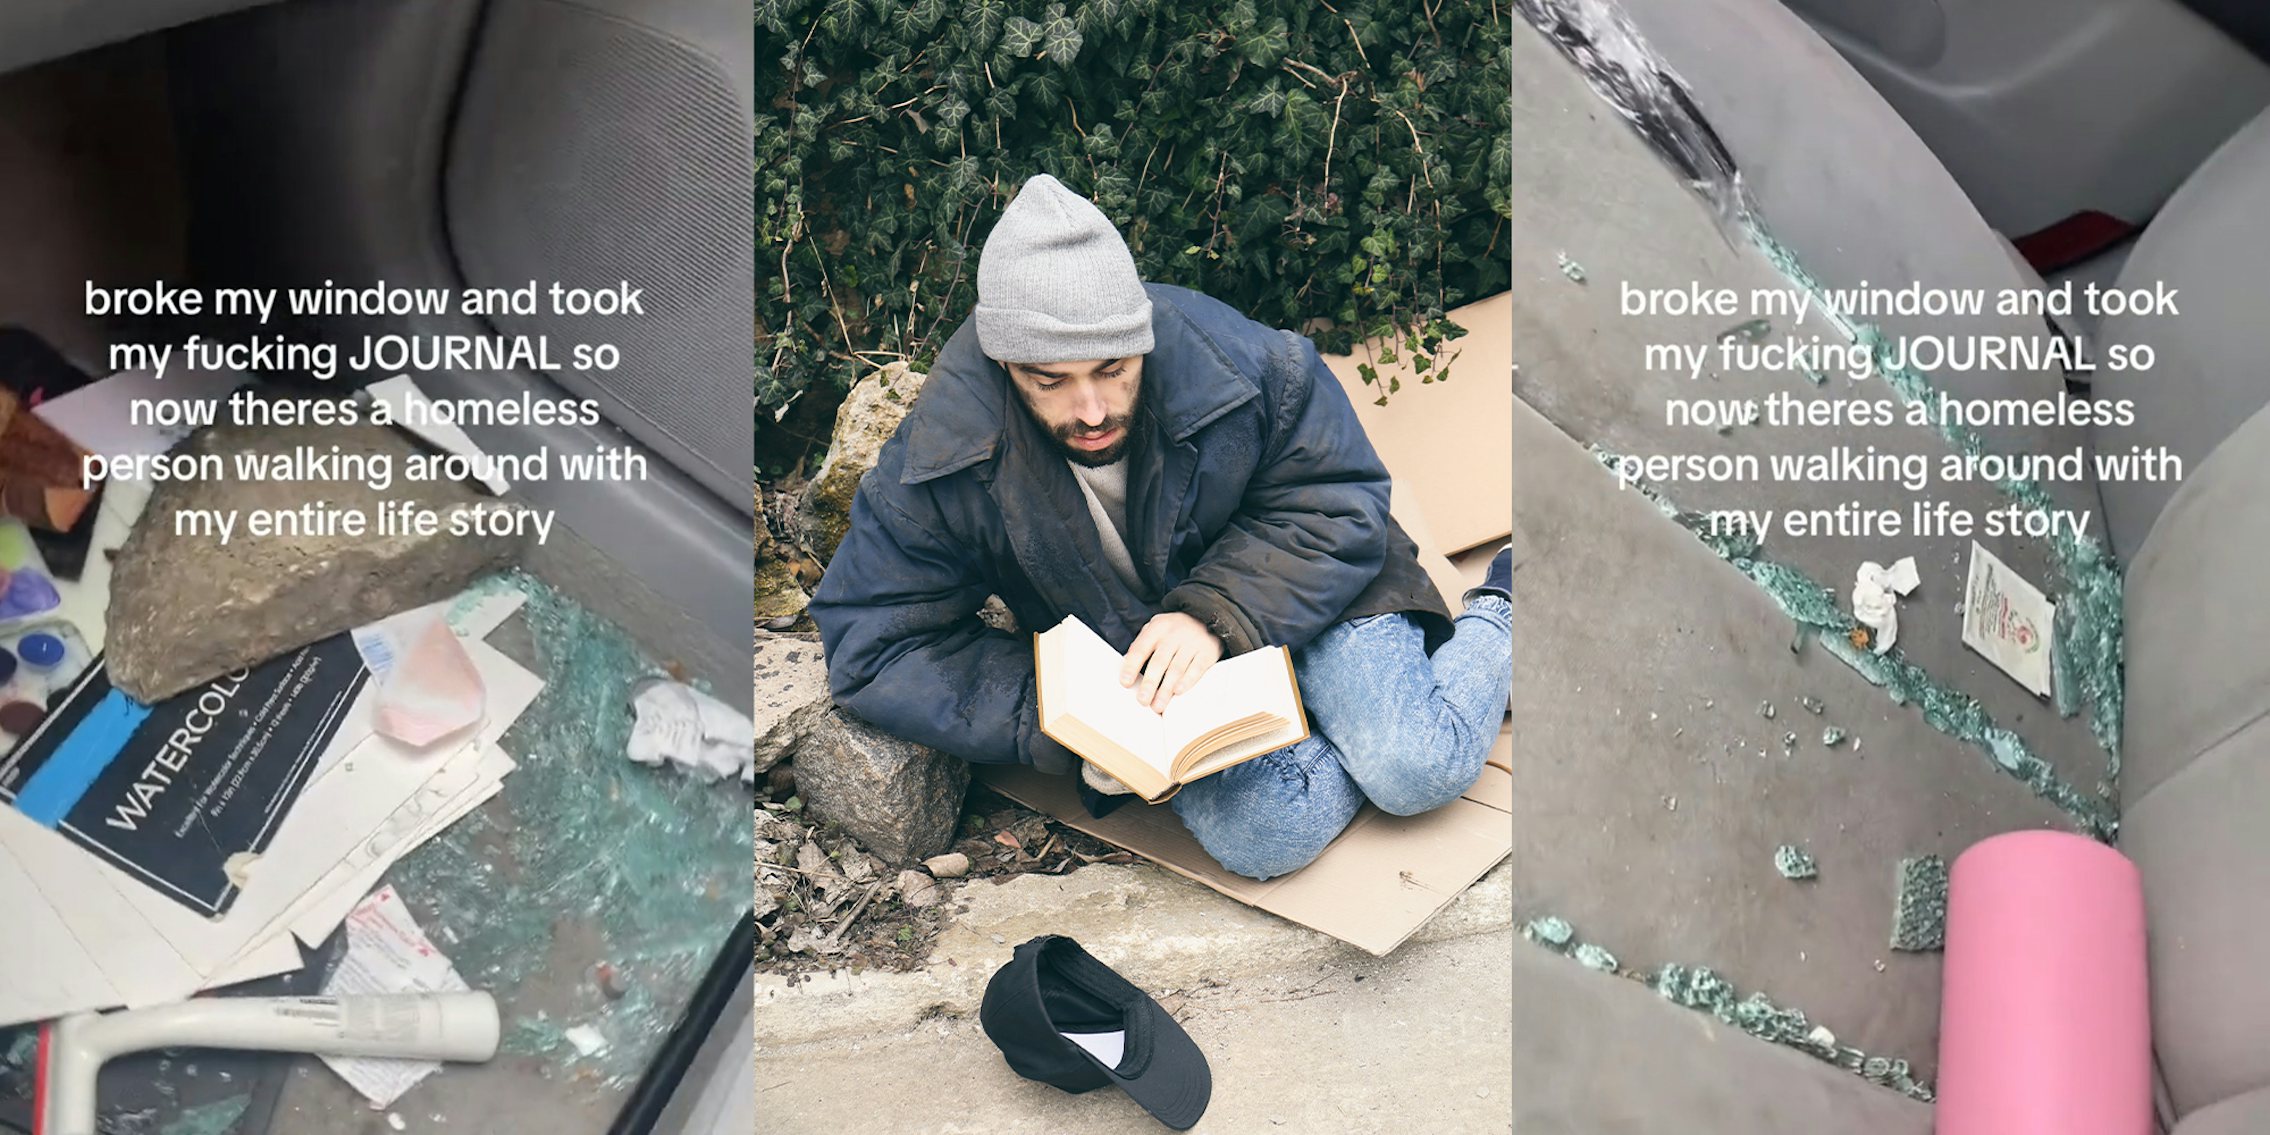 Rock shattered vehicle glass; homeless man reading journal